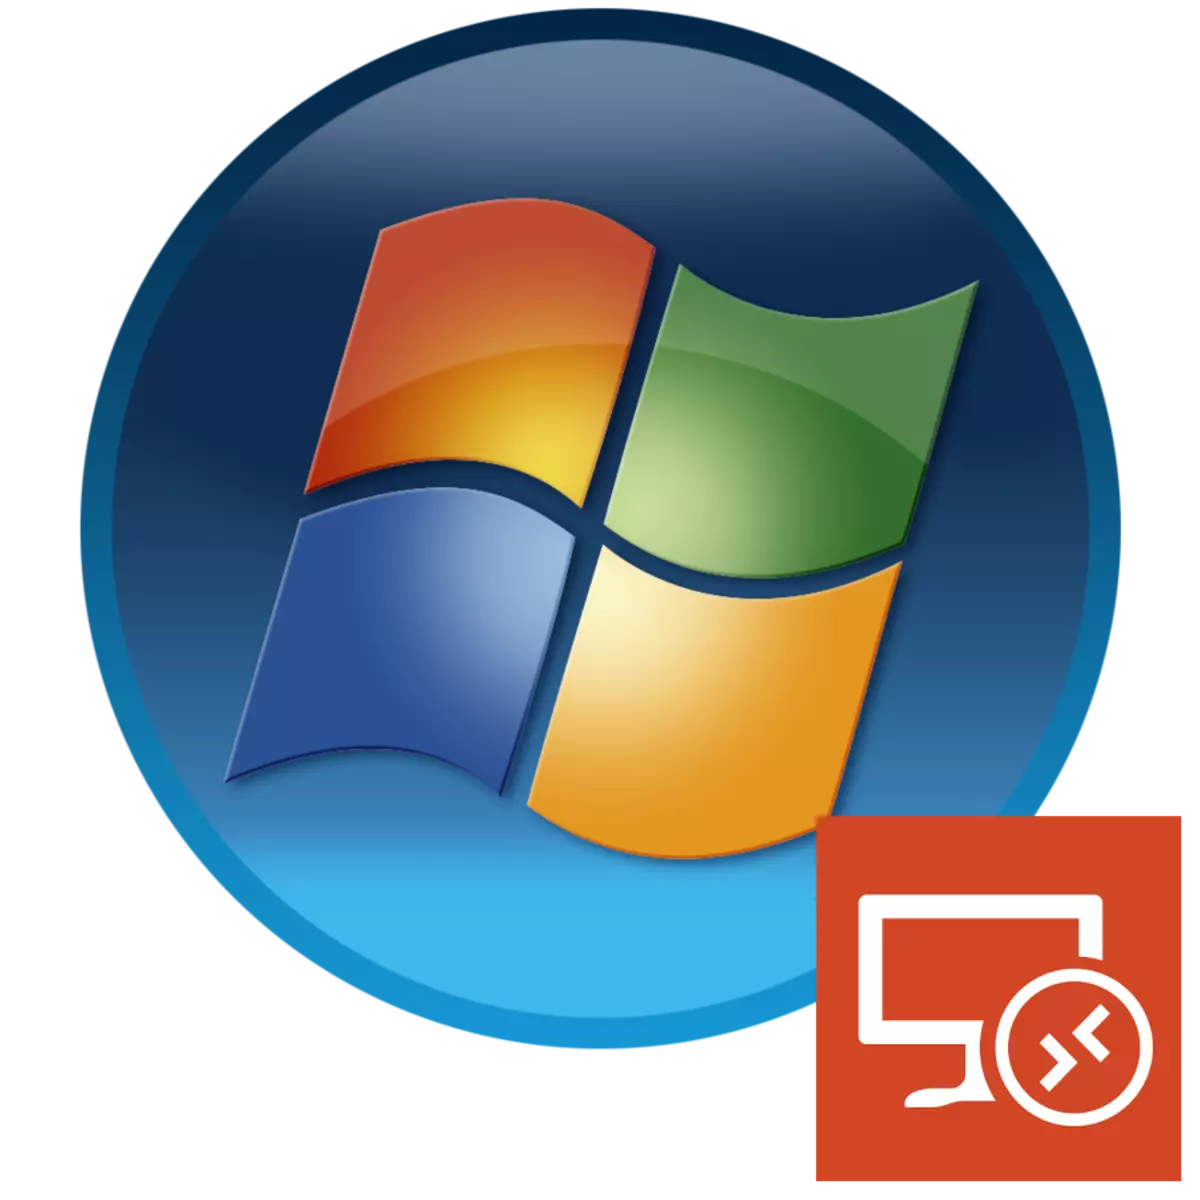 RDP 8 nó RDP 8.1 in Windows 7